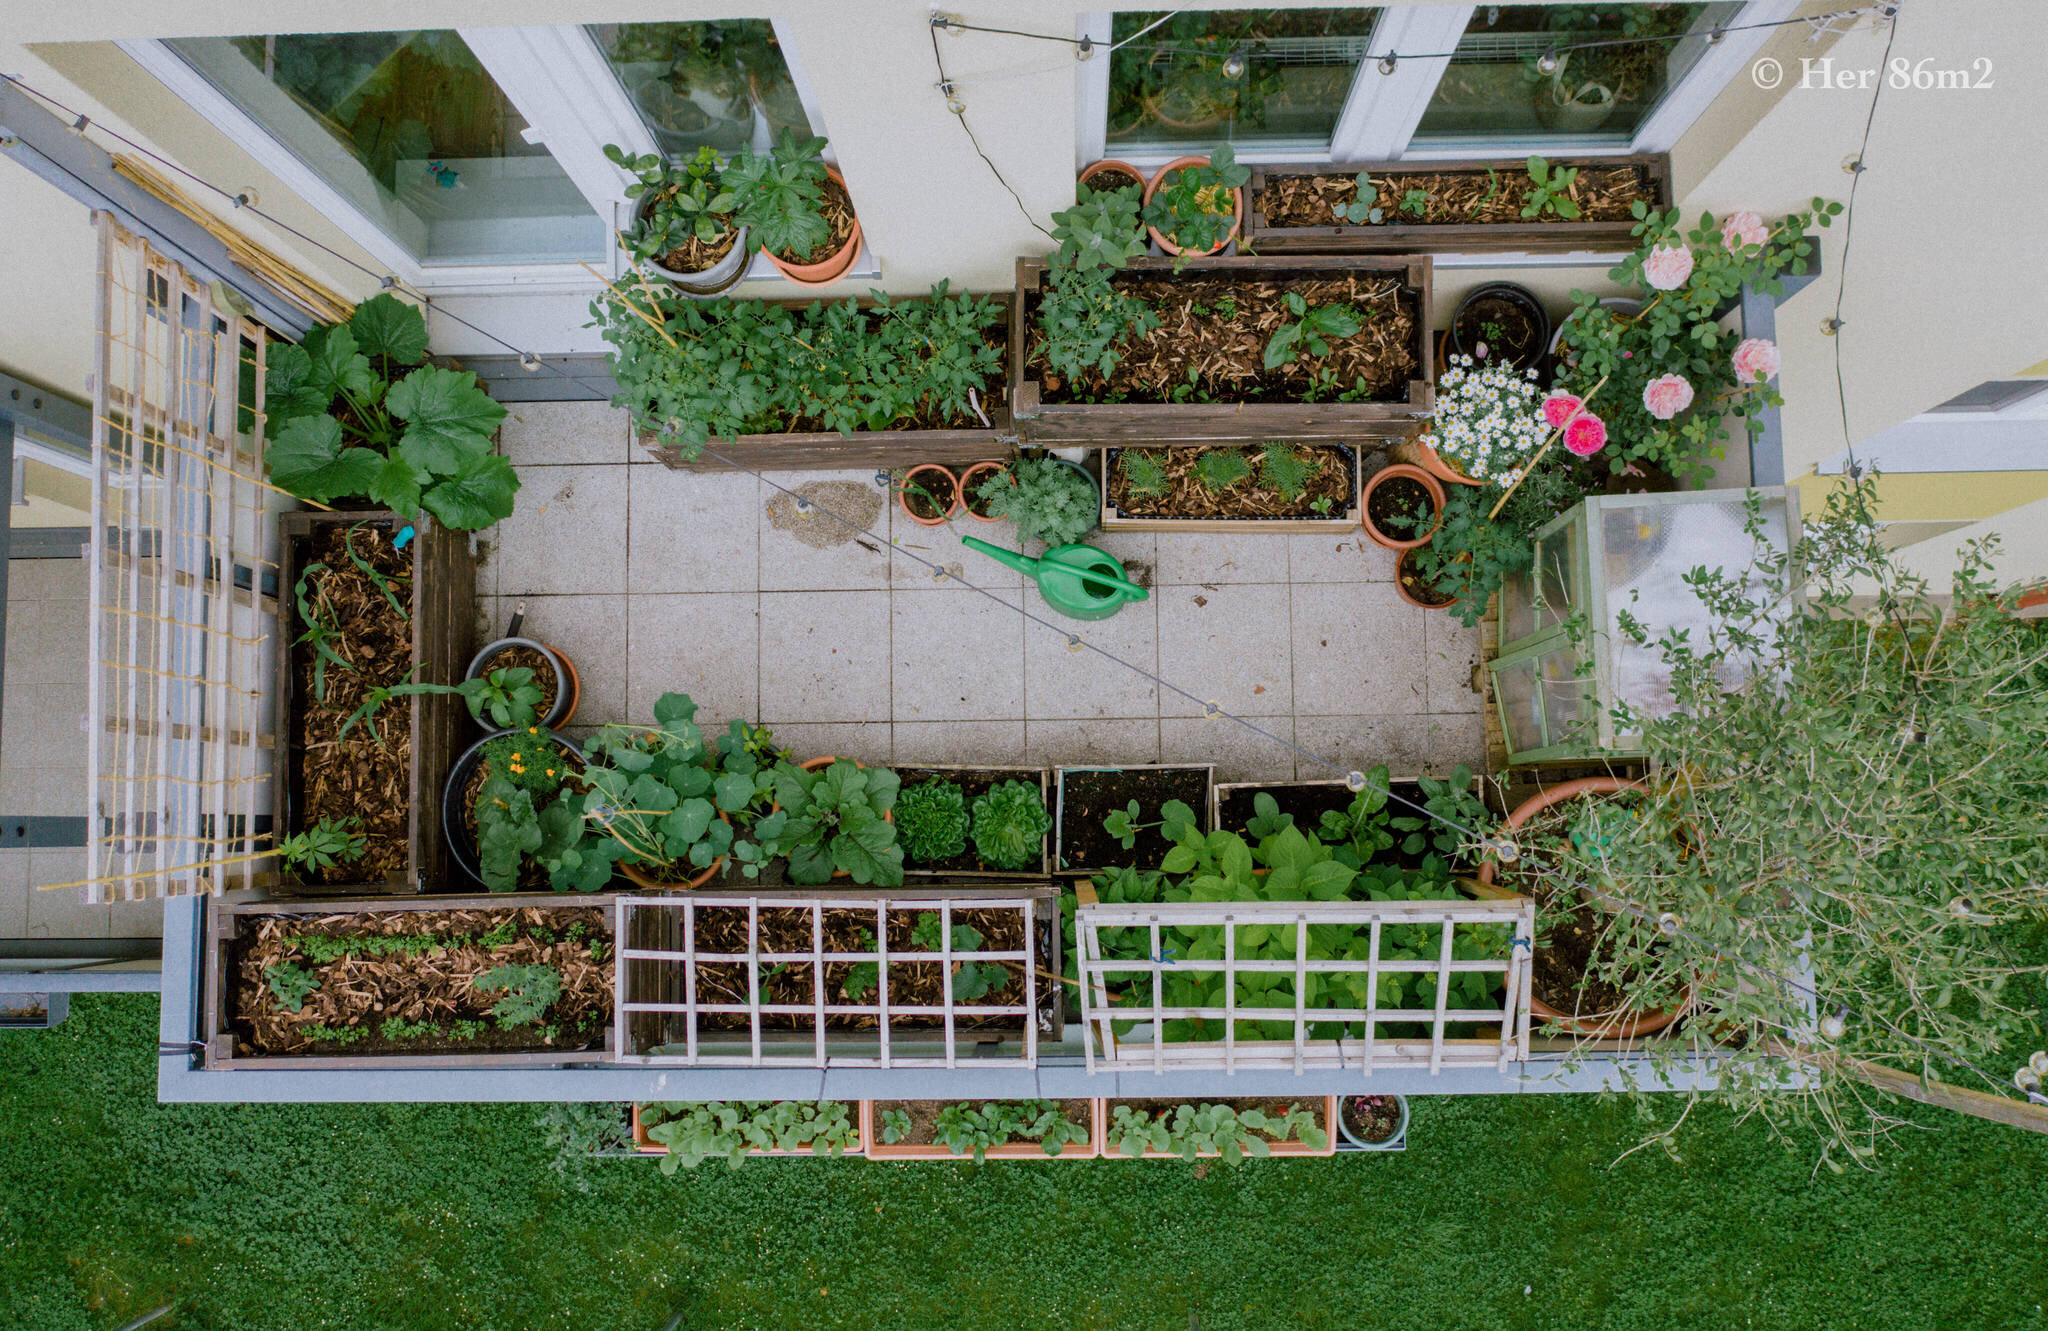 Her 86m2 - My 8m² Balcony Vegetable Garden | A Wonderful 200 Day Journey 93b.jpg